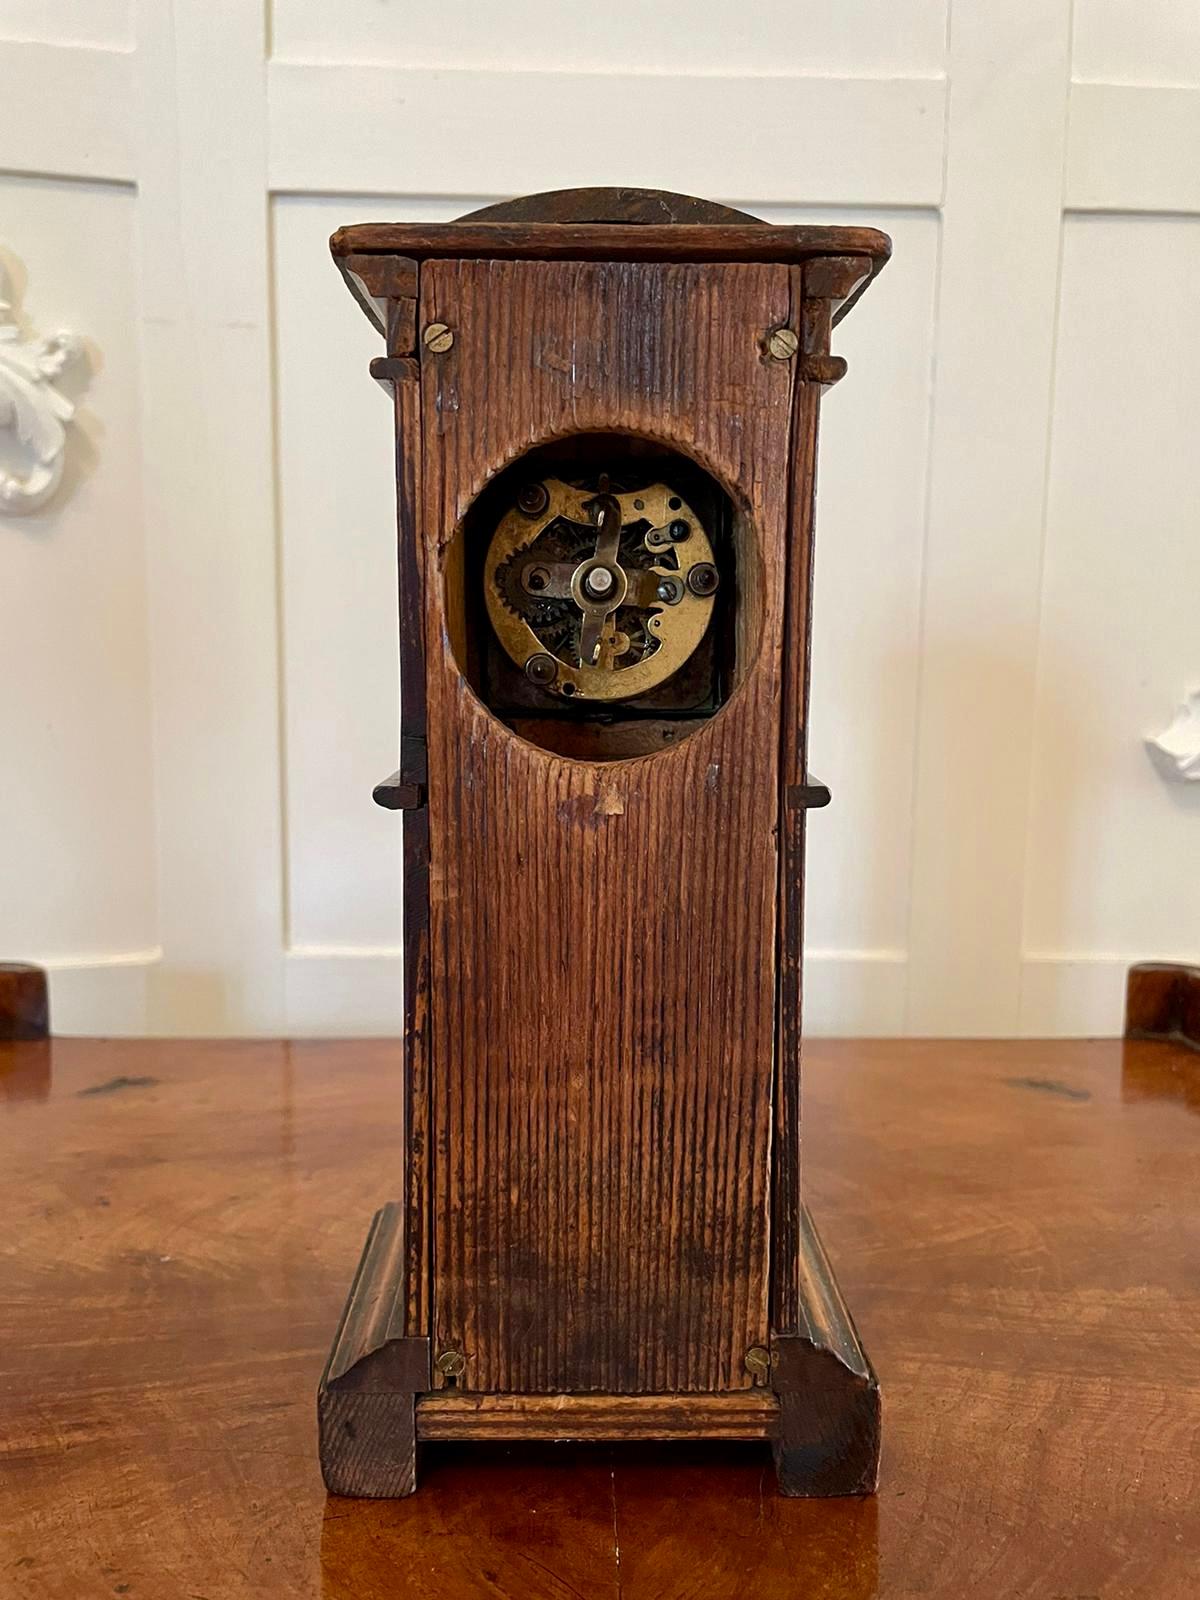 miniature grandfather clocks